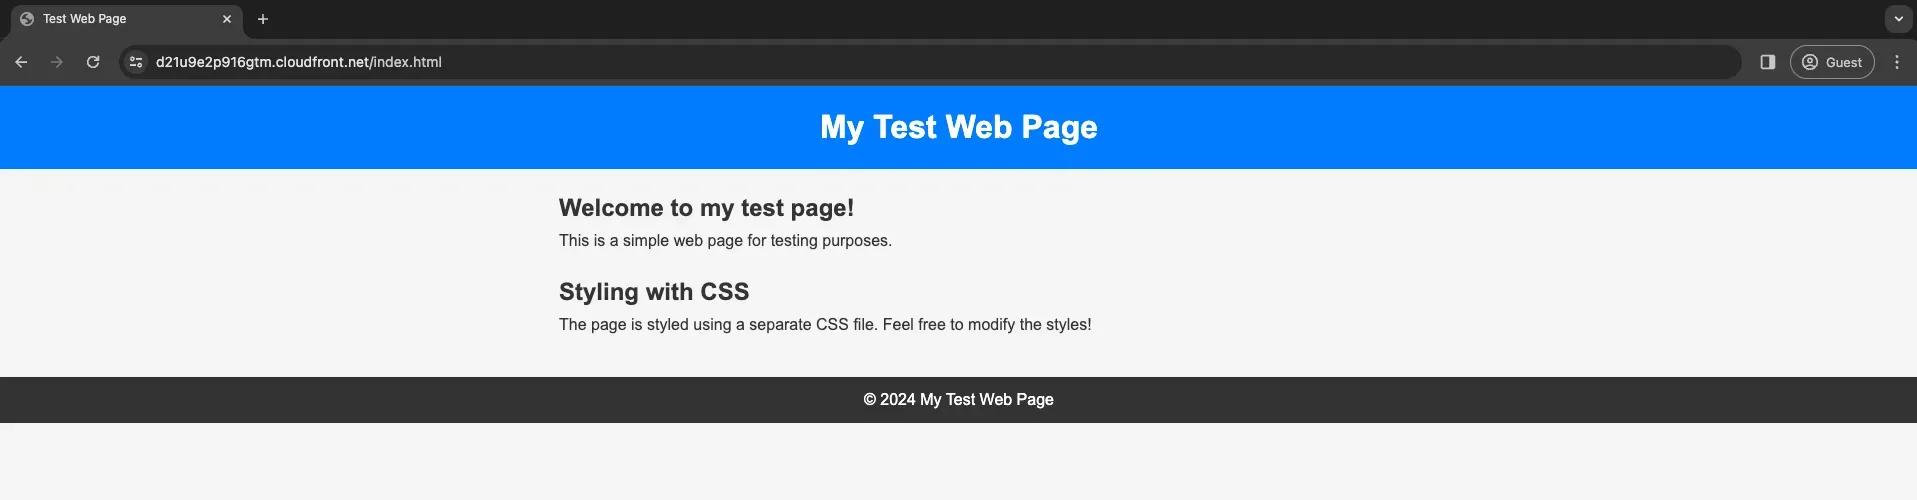 Test Web Page